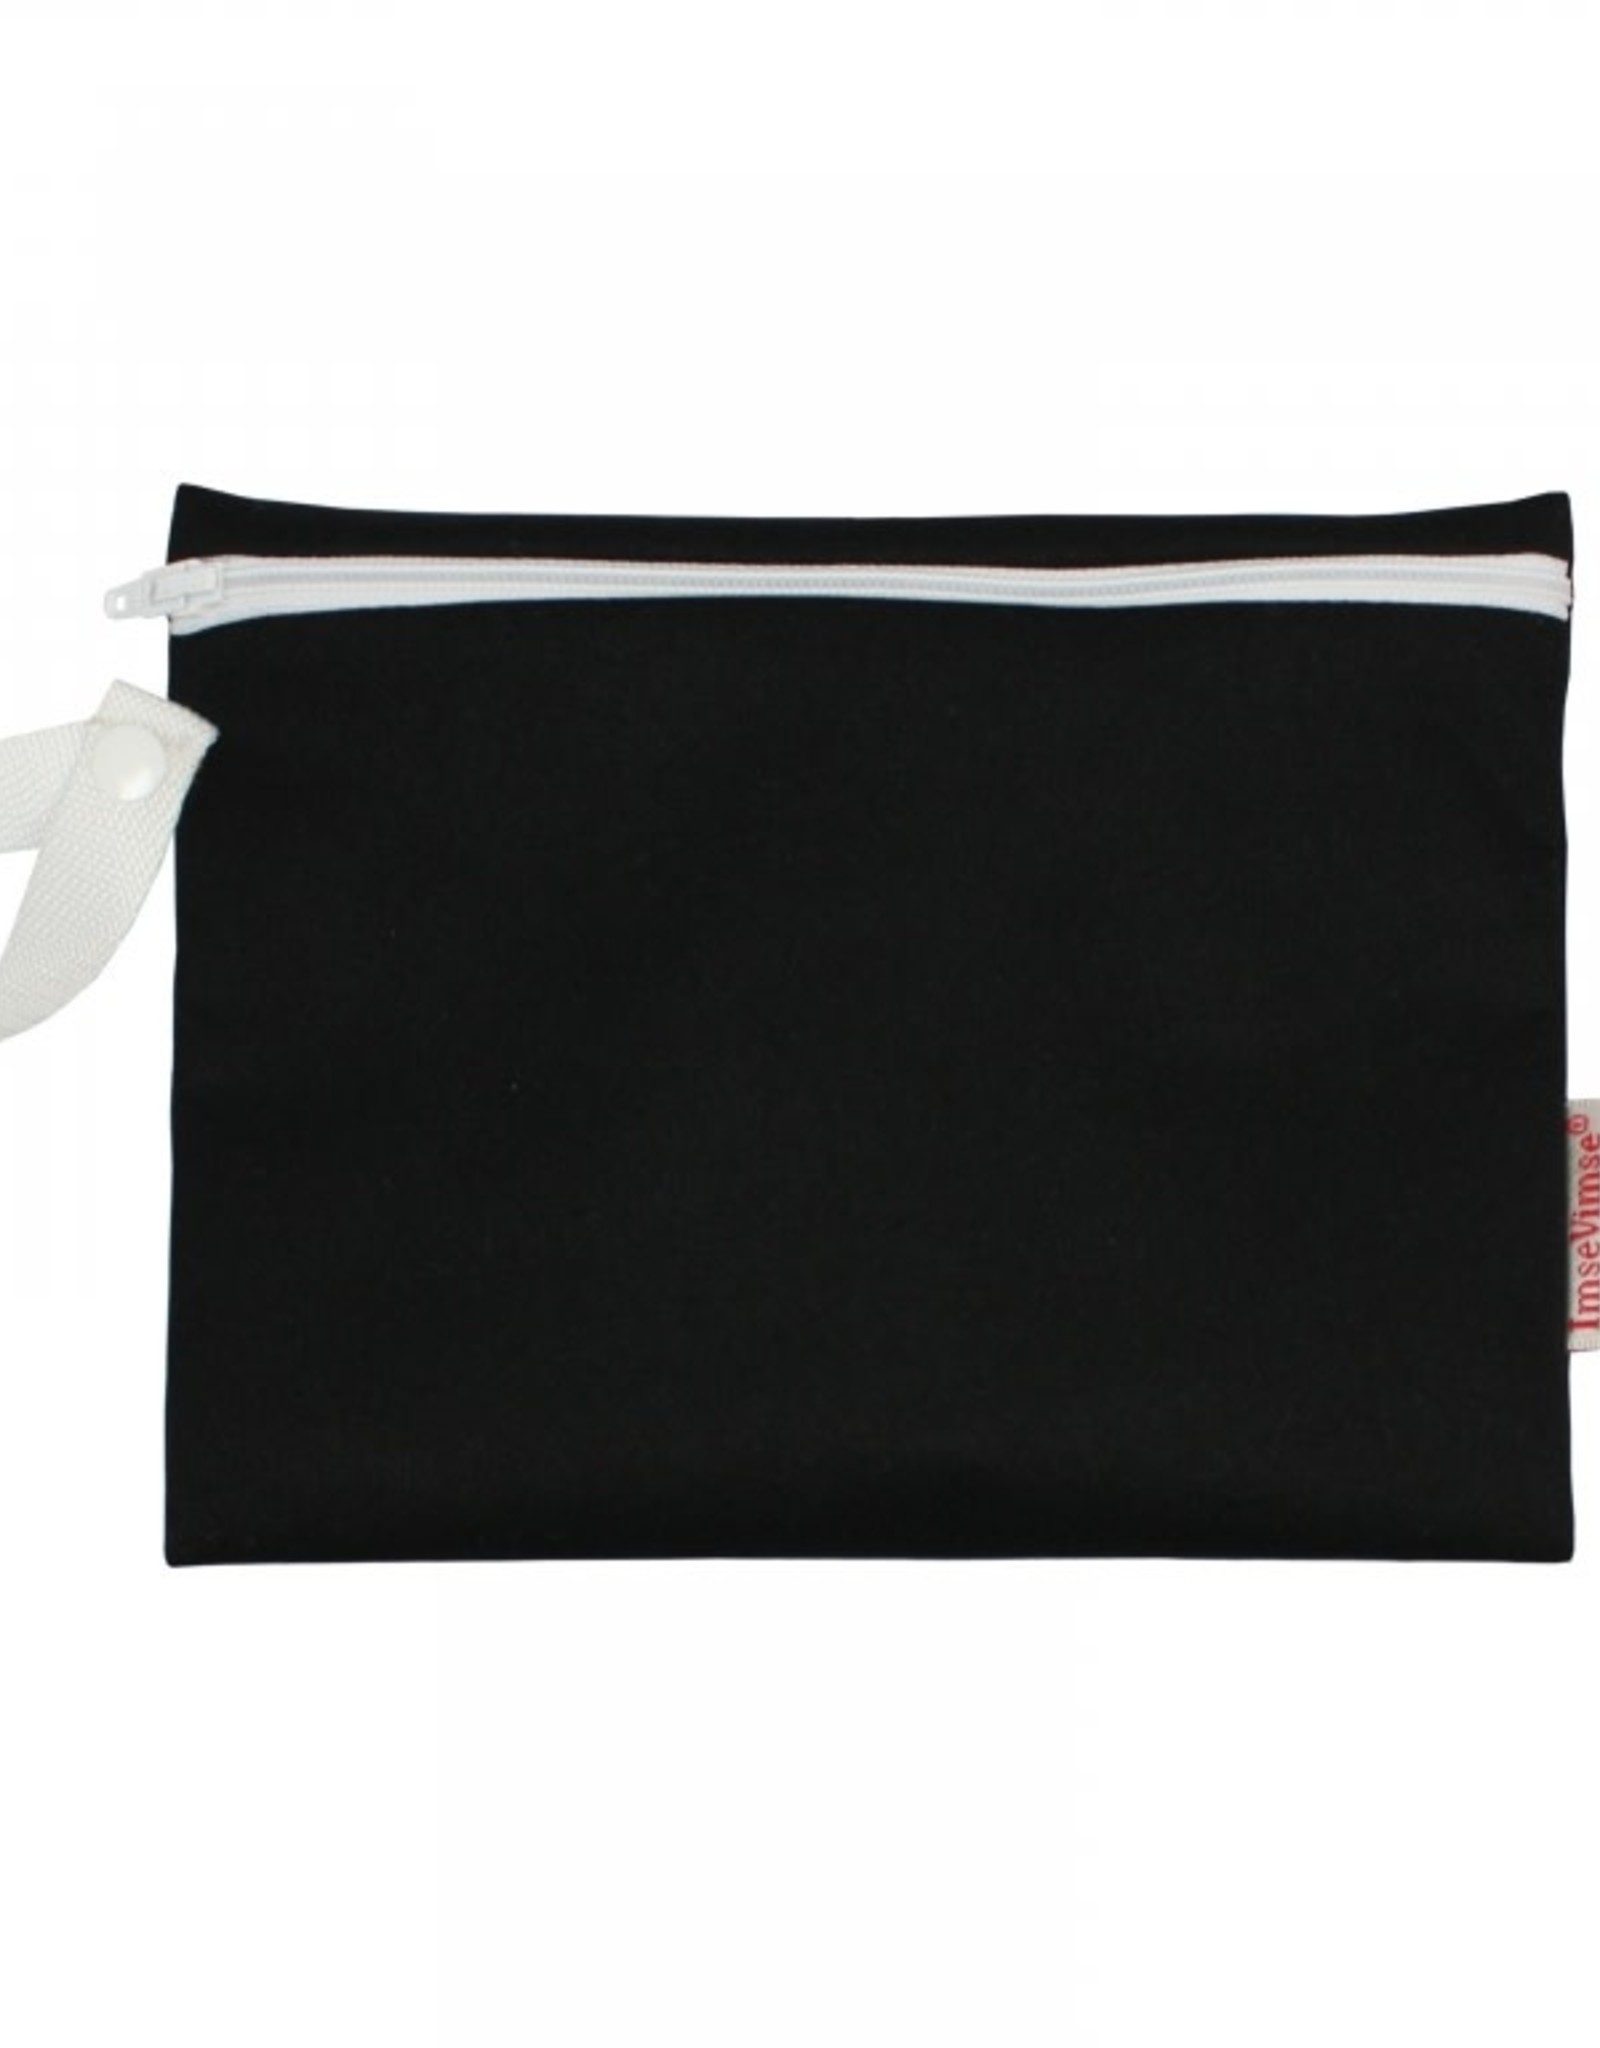 ImseVimse Wet Bag Mini, Black 20 x 15cm